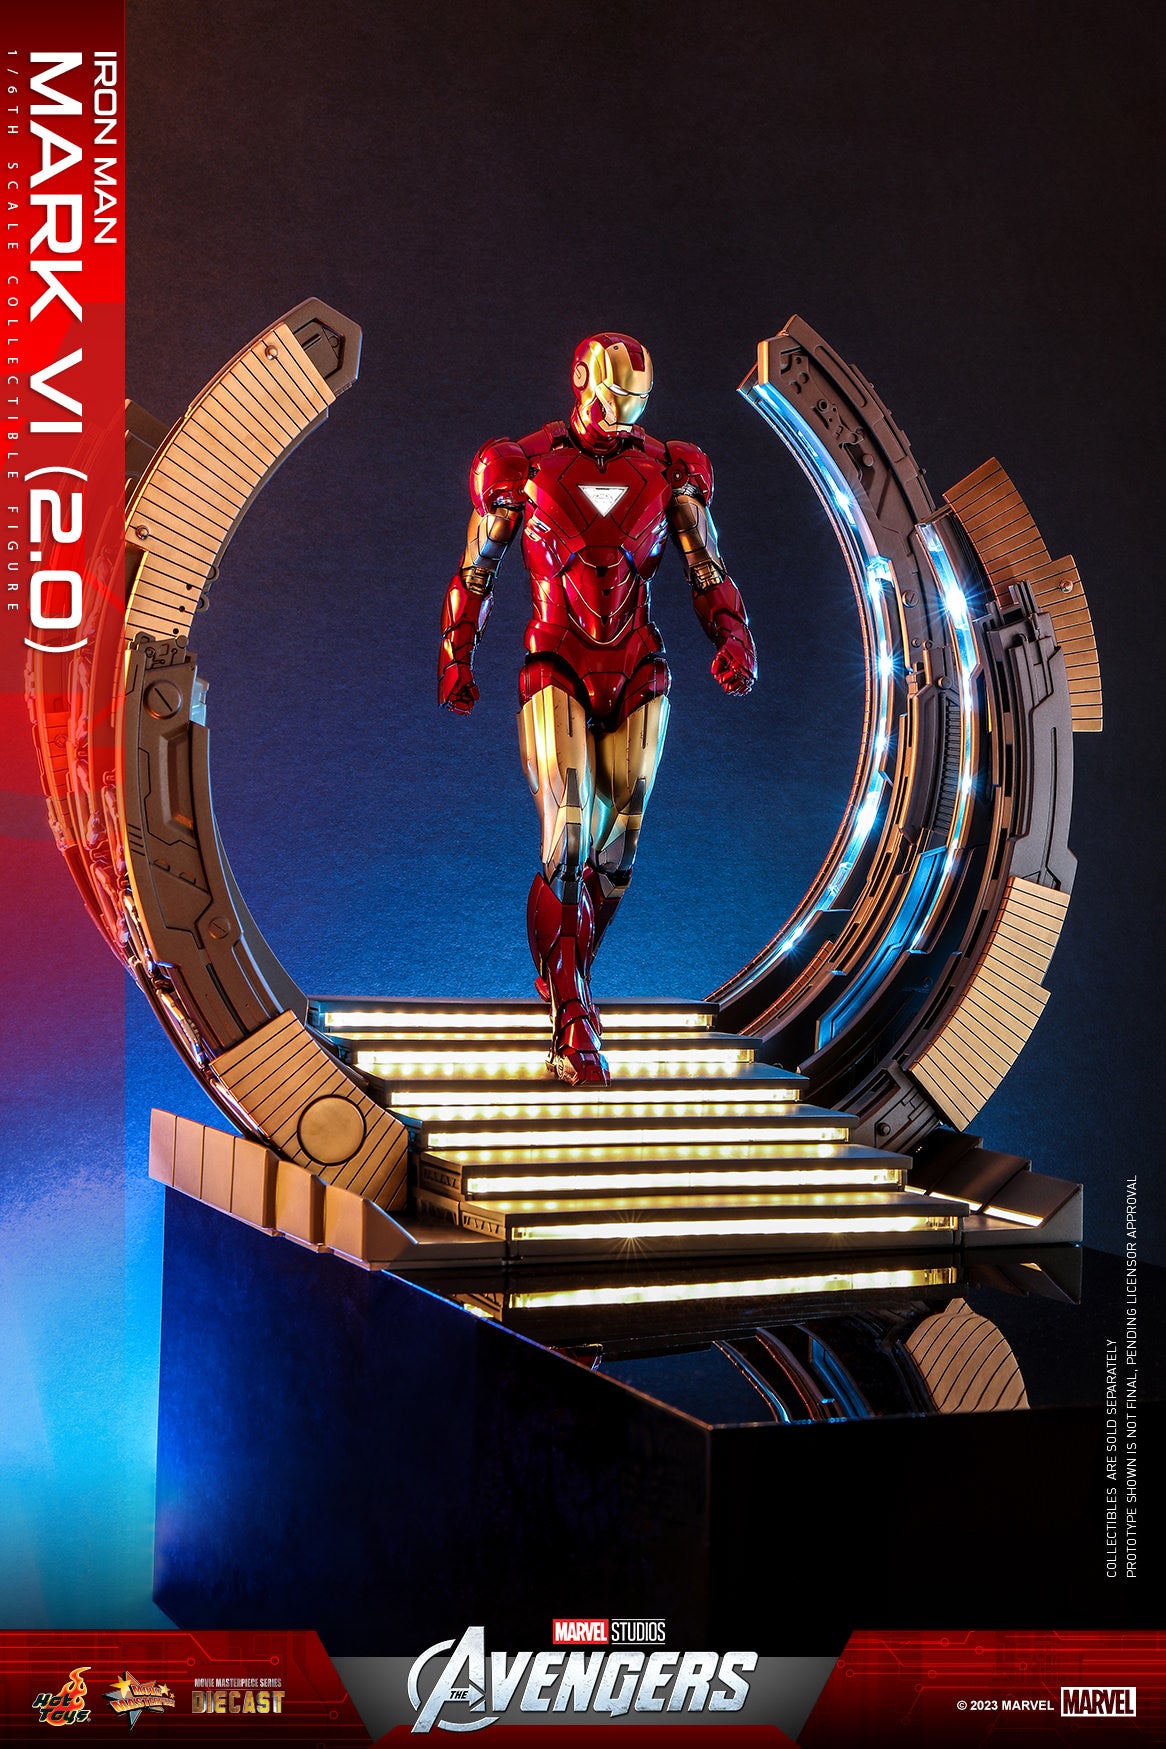 Iron Man: Mark VI (2.0): Marvel: MMS687D52: Hot Toys